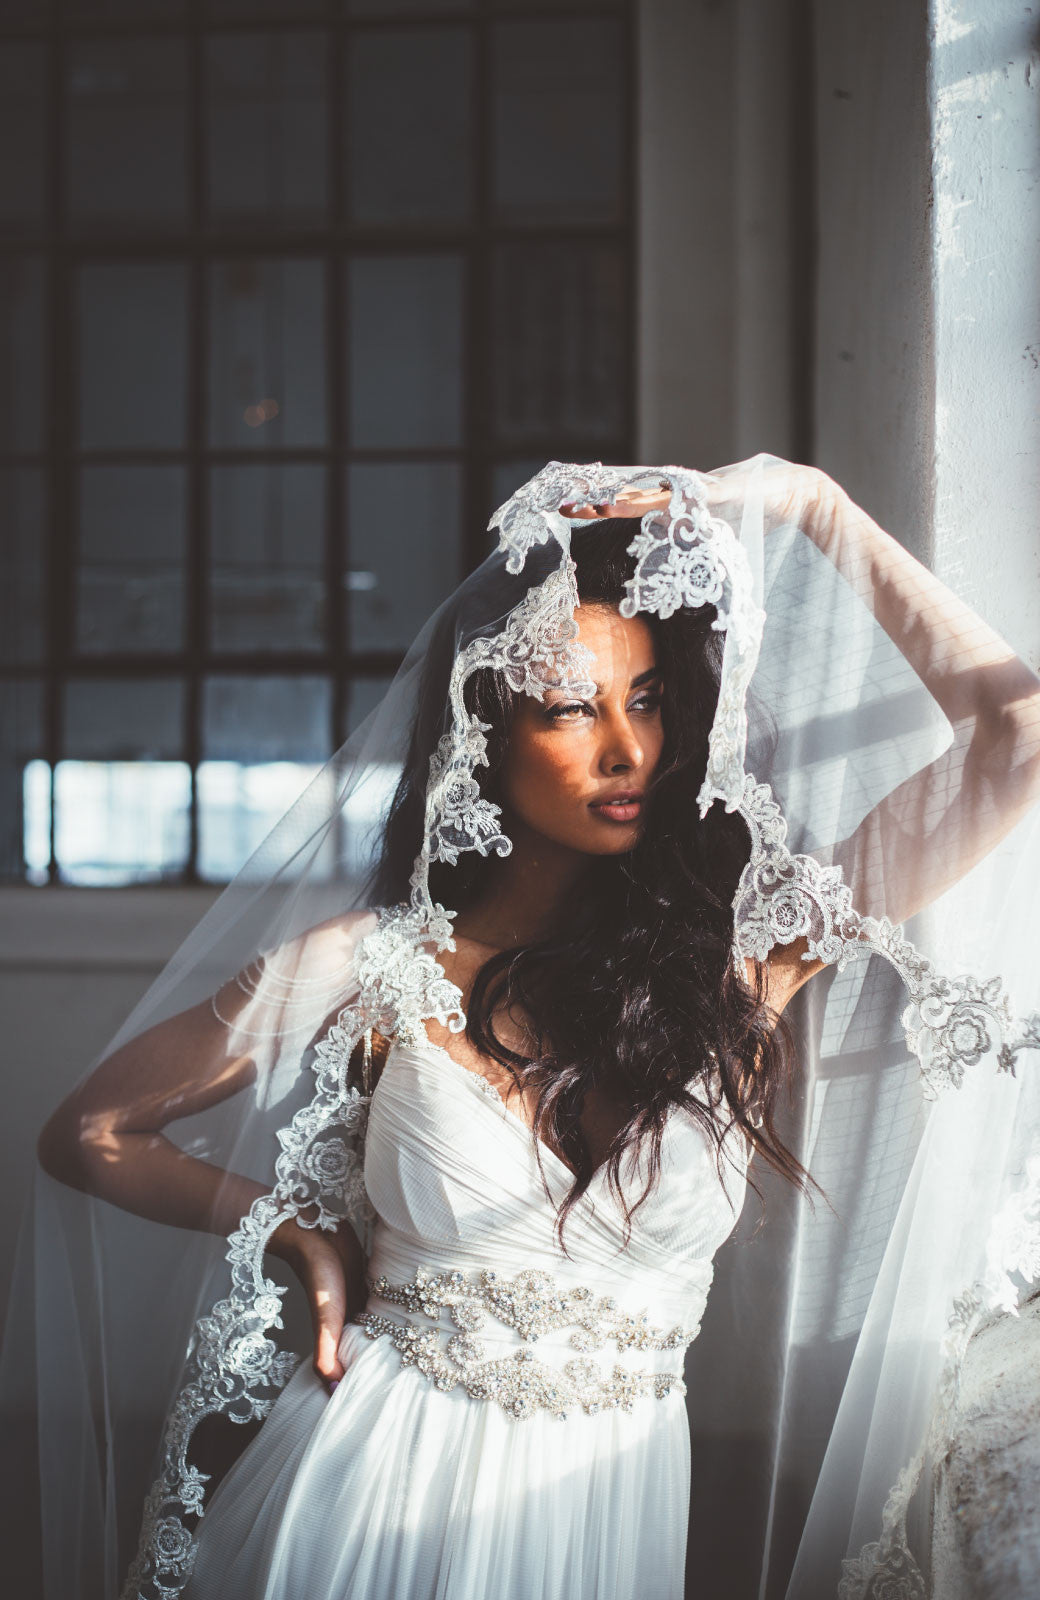 Sample Serafina Lace Bridal Veil - Daphne Newman Design